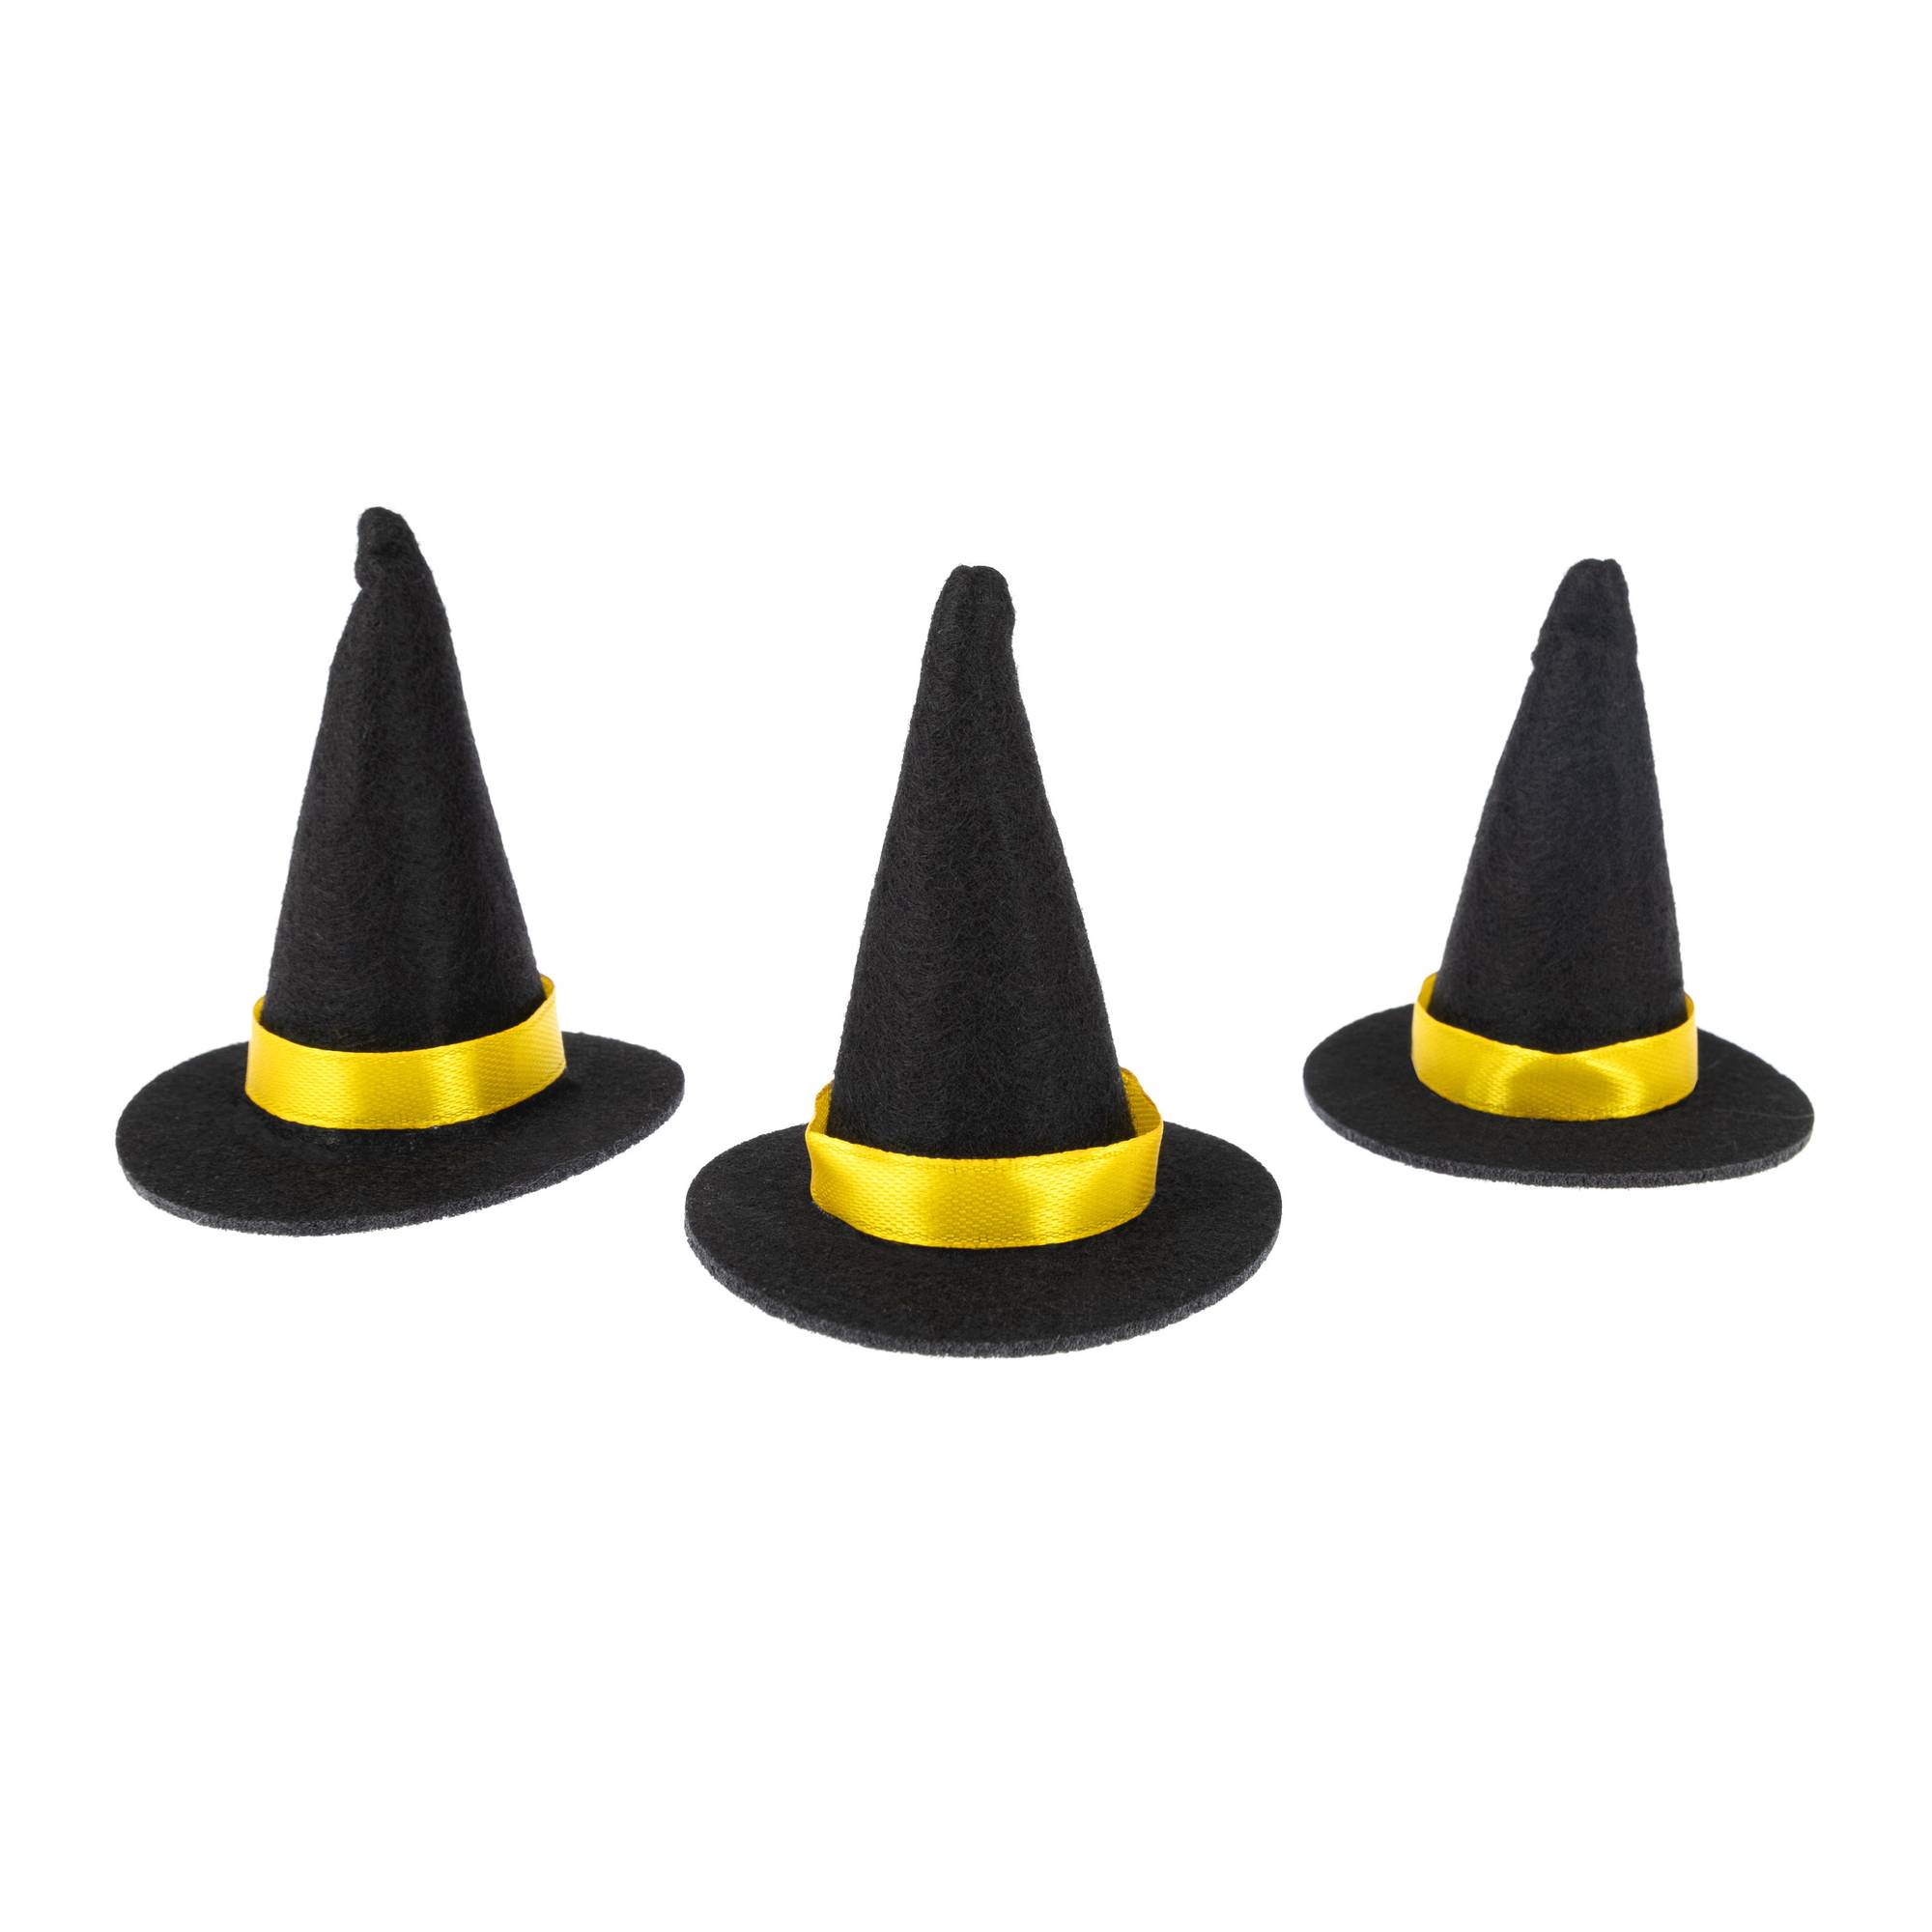 663166_1000_1_-mini-witches-hats-3pk-black-halloween-decor.jpg